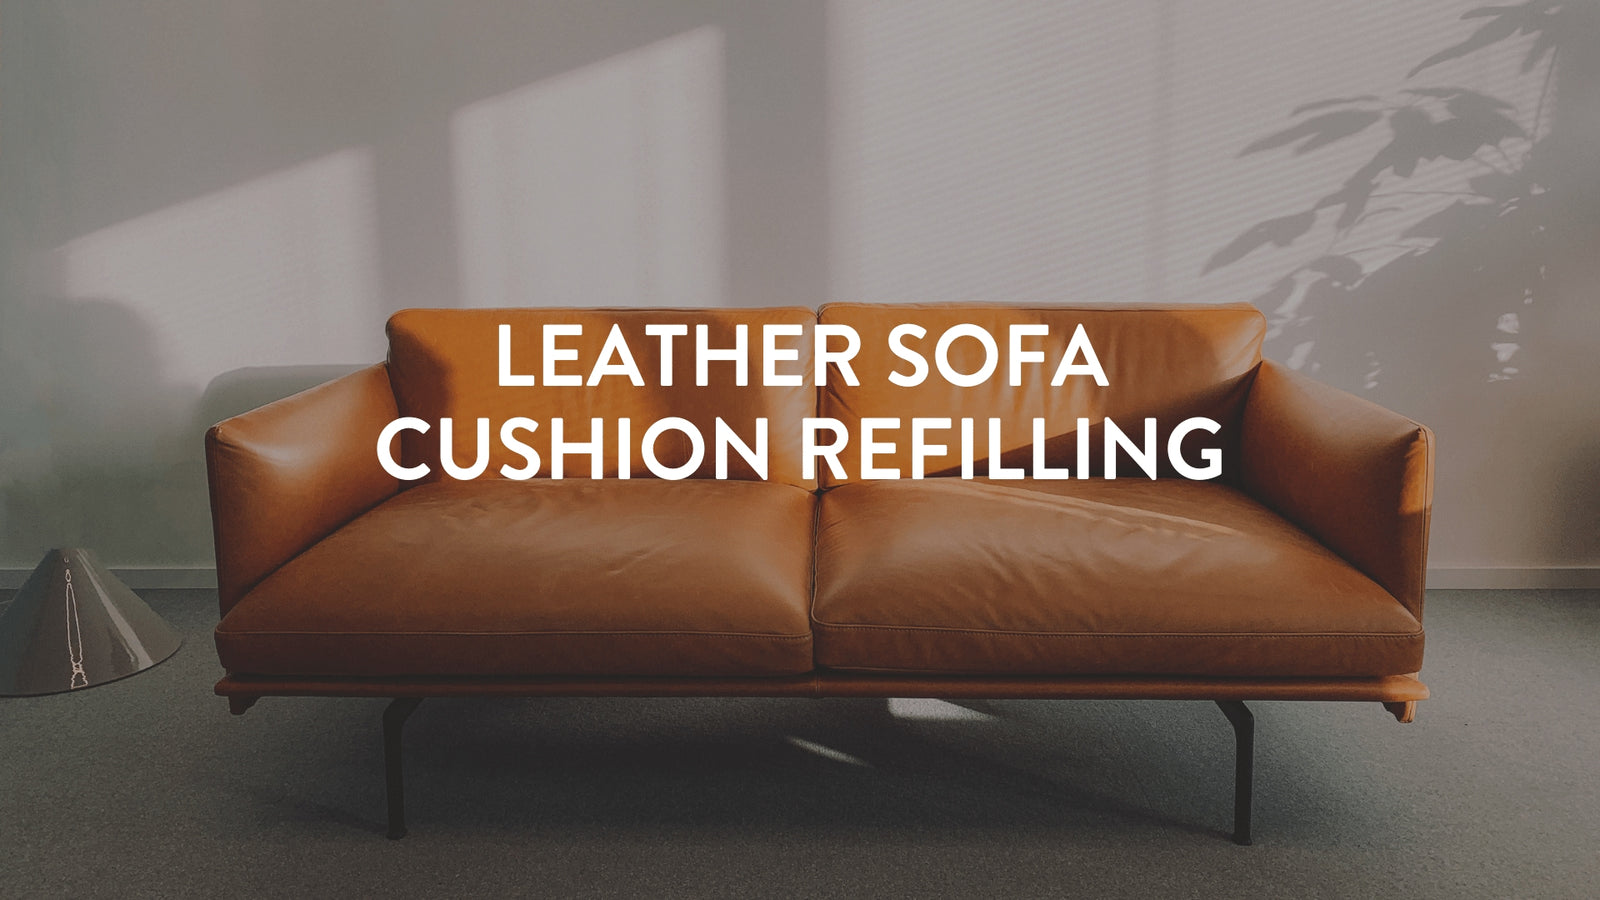 Leather sofa cushion refilling can leather sofa cushions be restuffed